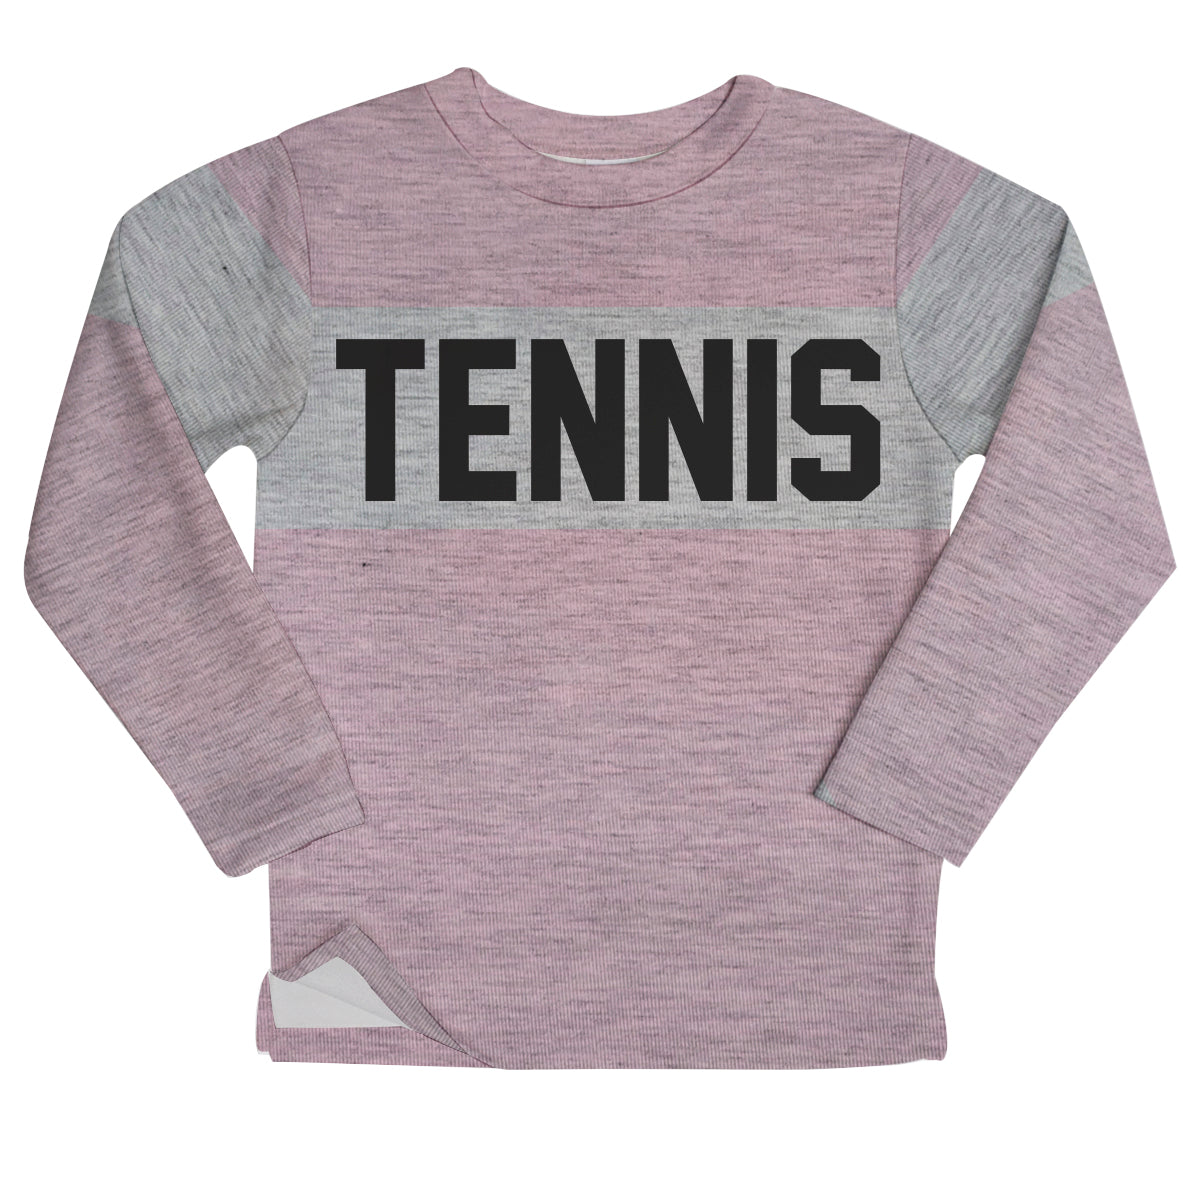 Tennis Pink and Gray Heather Fleece Sweatshirt Side Vents